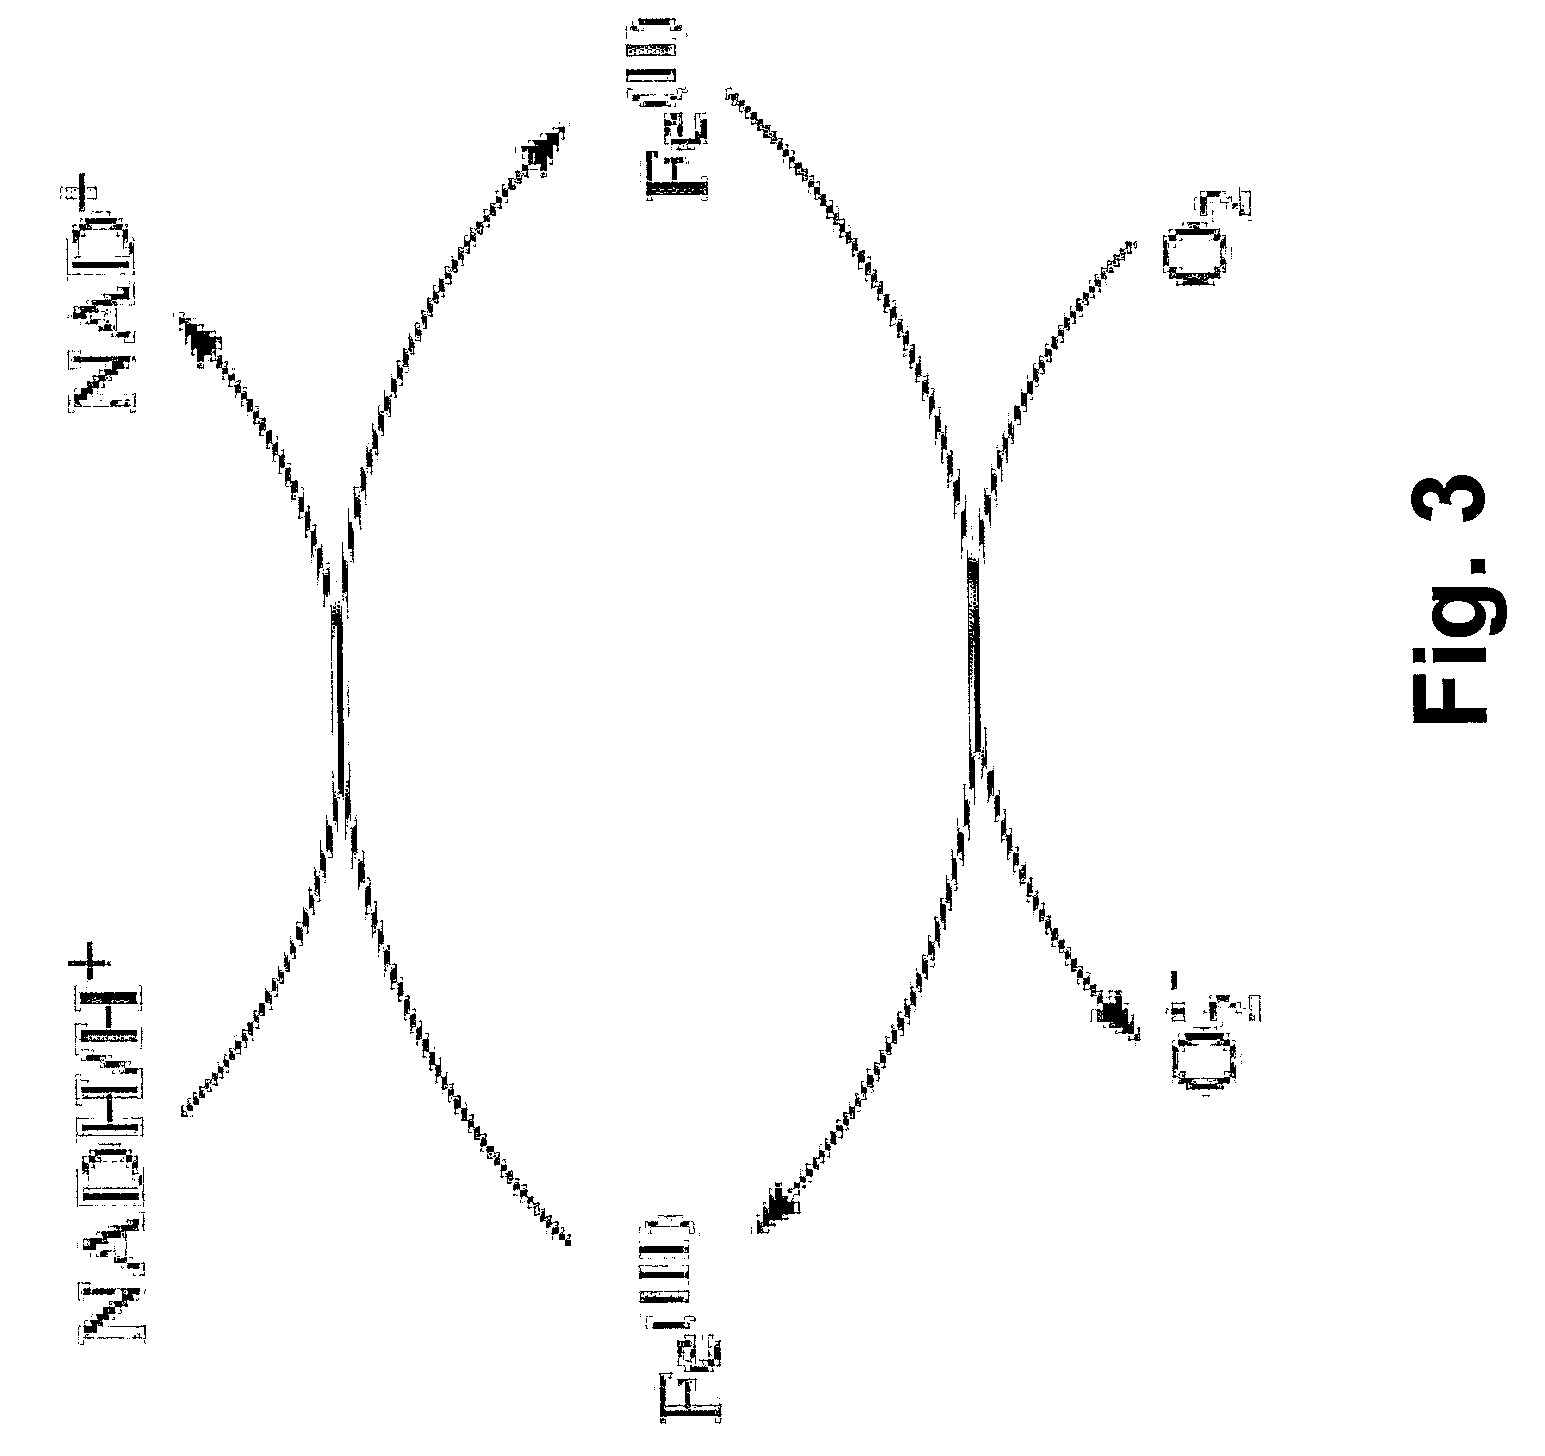 Desferrioxamine conjugates, derivatives and analogues